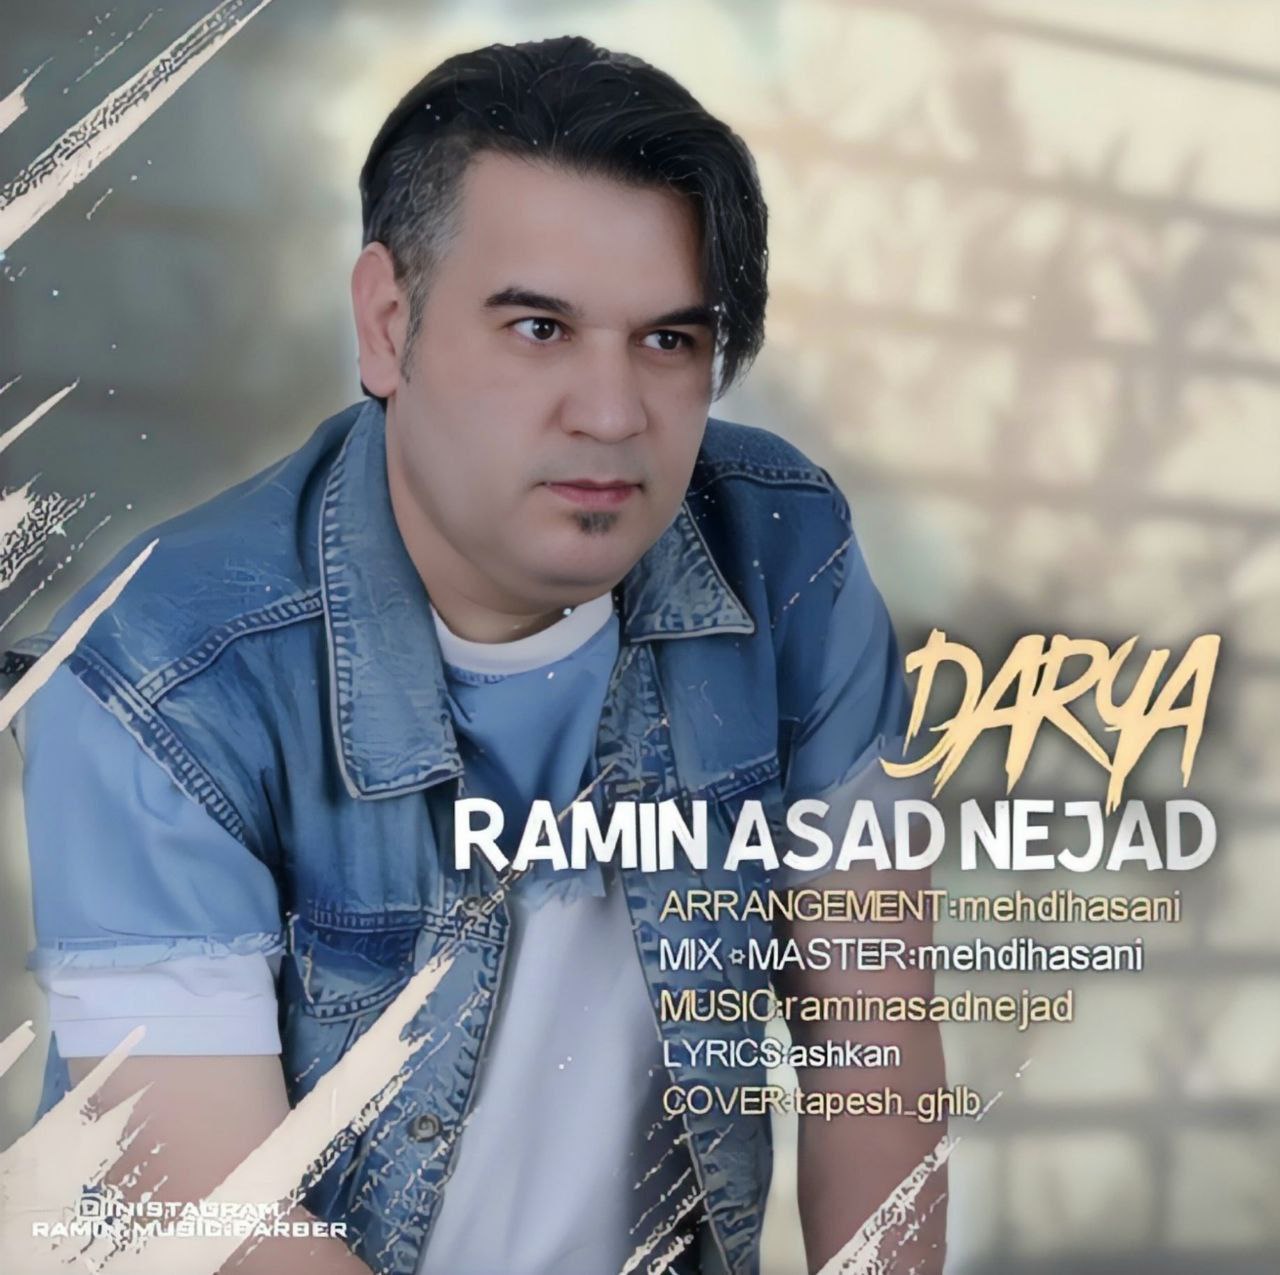 Ramin Asad Nezhad – Darya